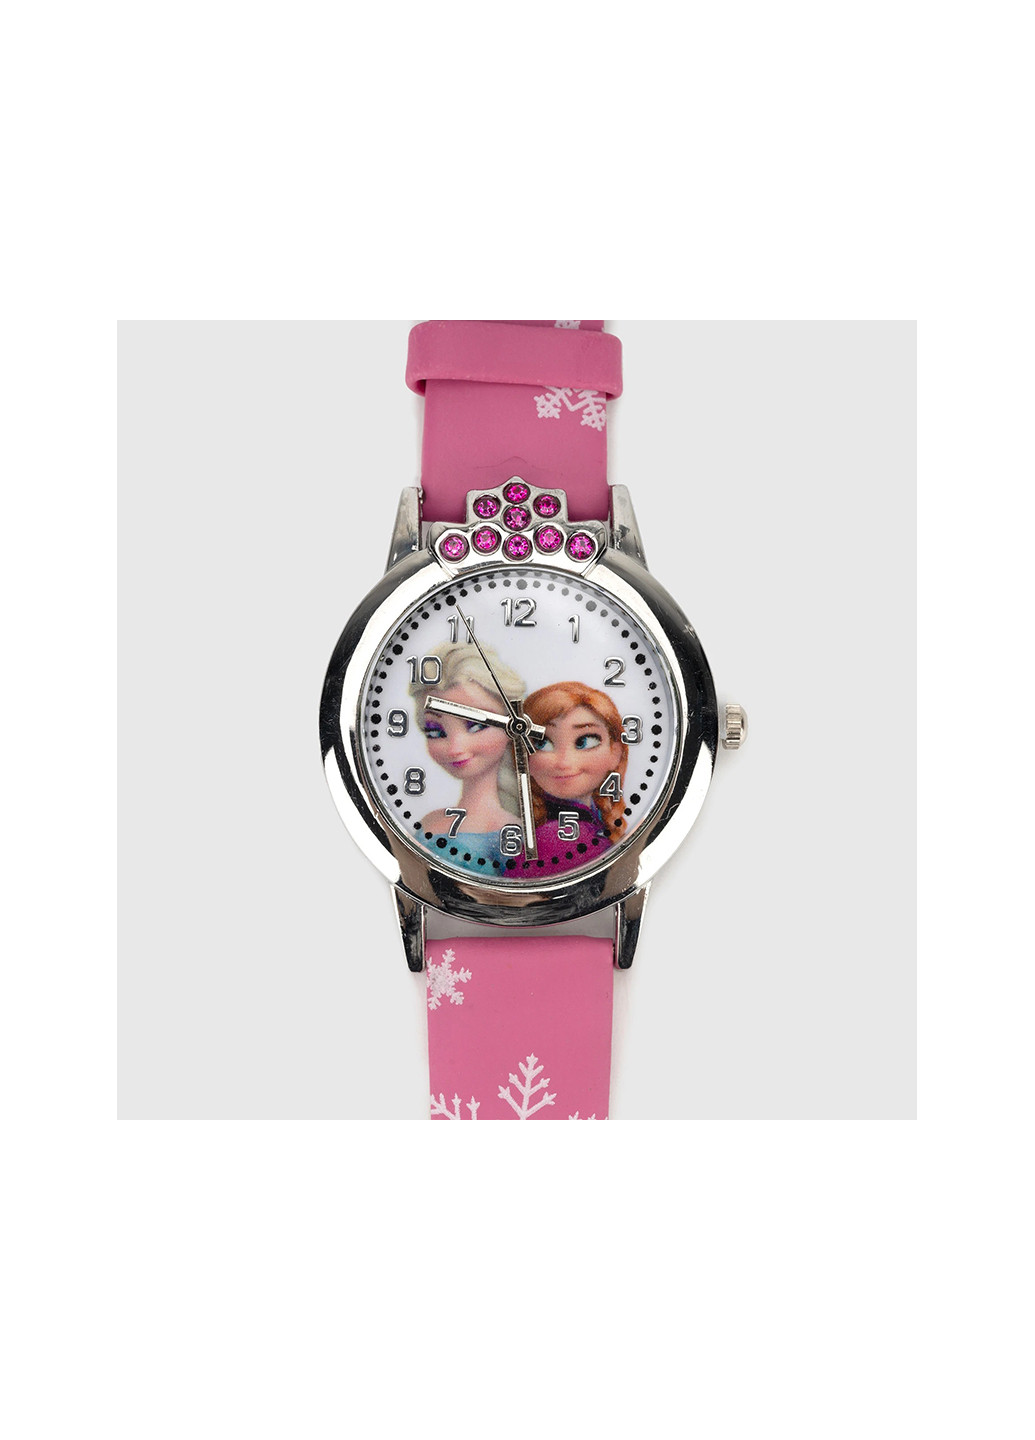 Часы детские C61575 No Brand (274049130)